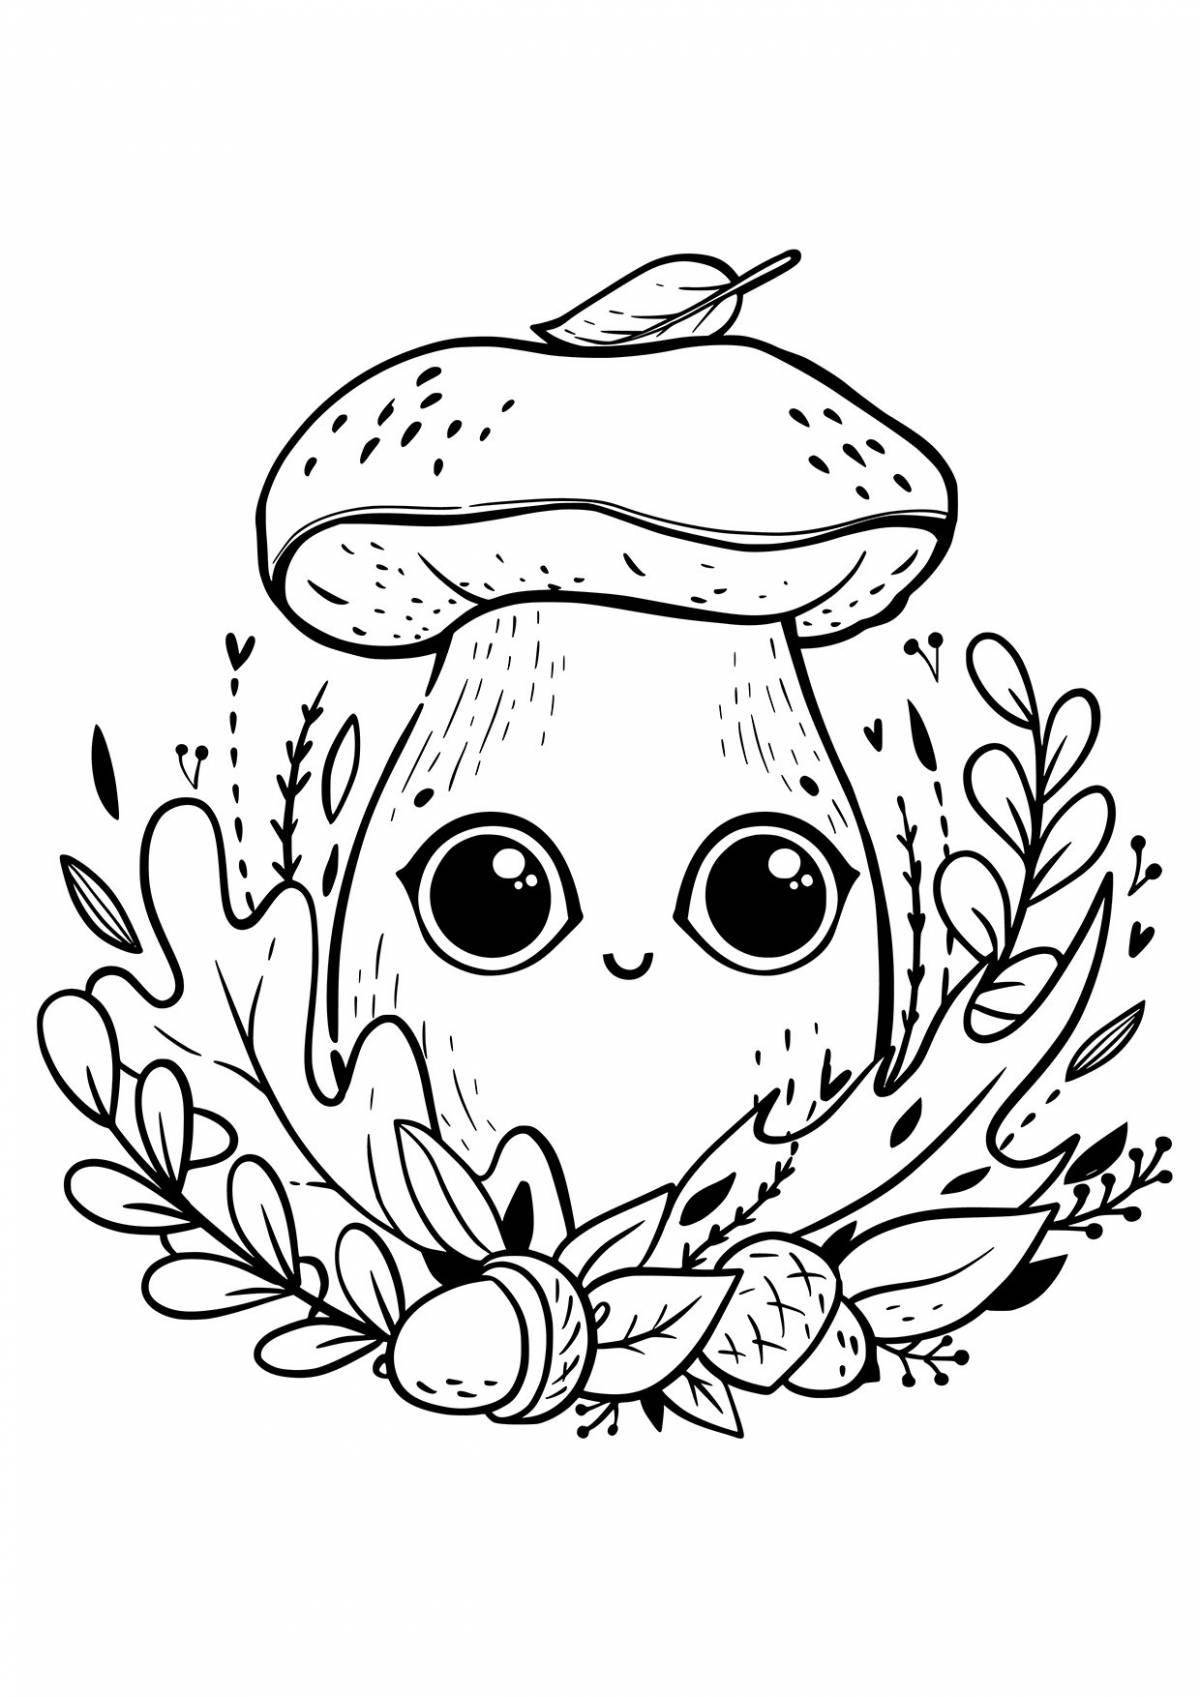 Красочная раскраска милой лягушки с грибком на голове